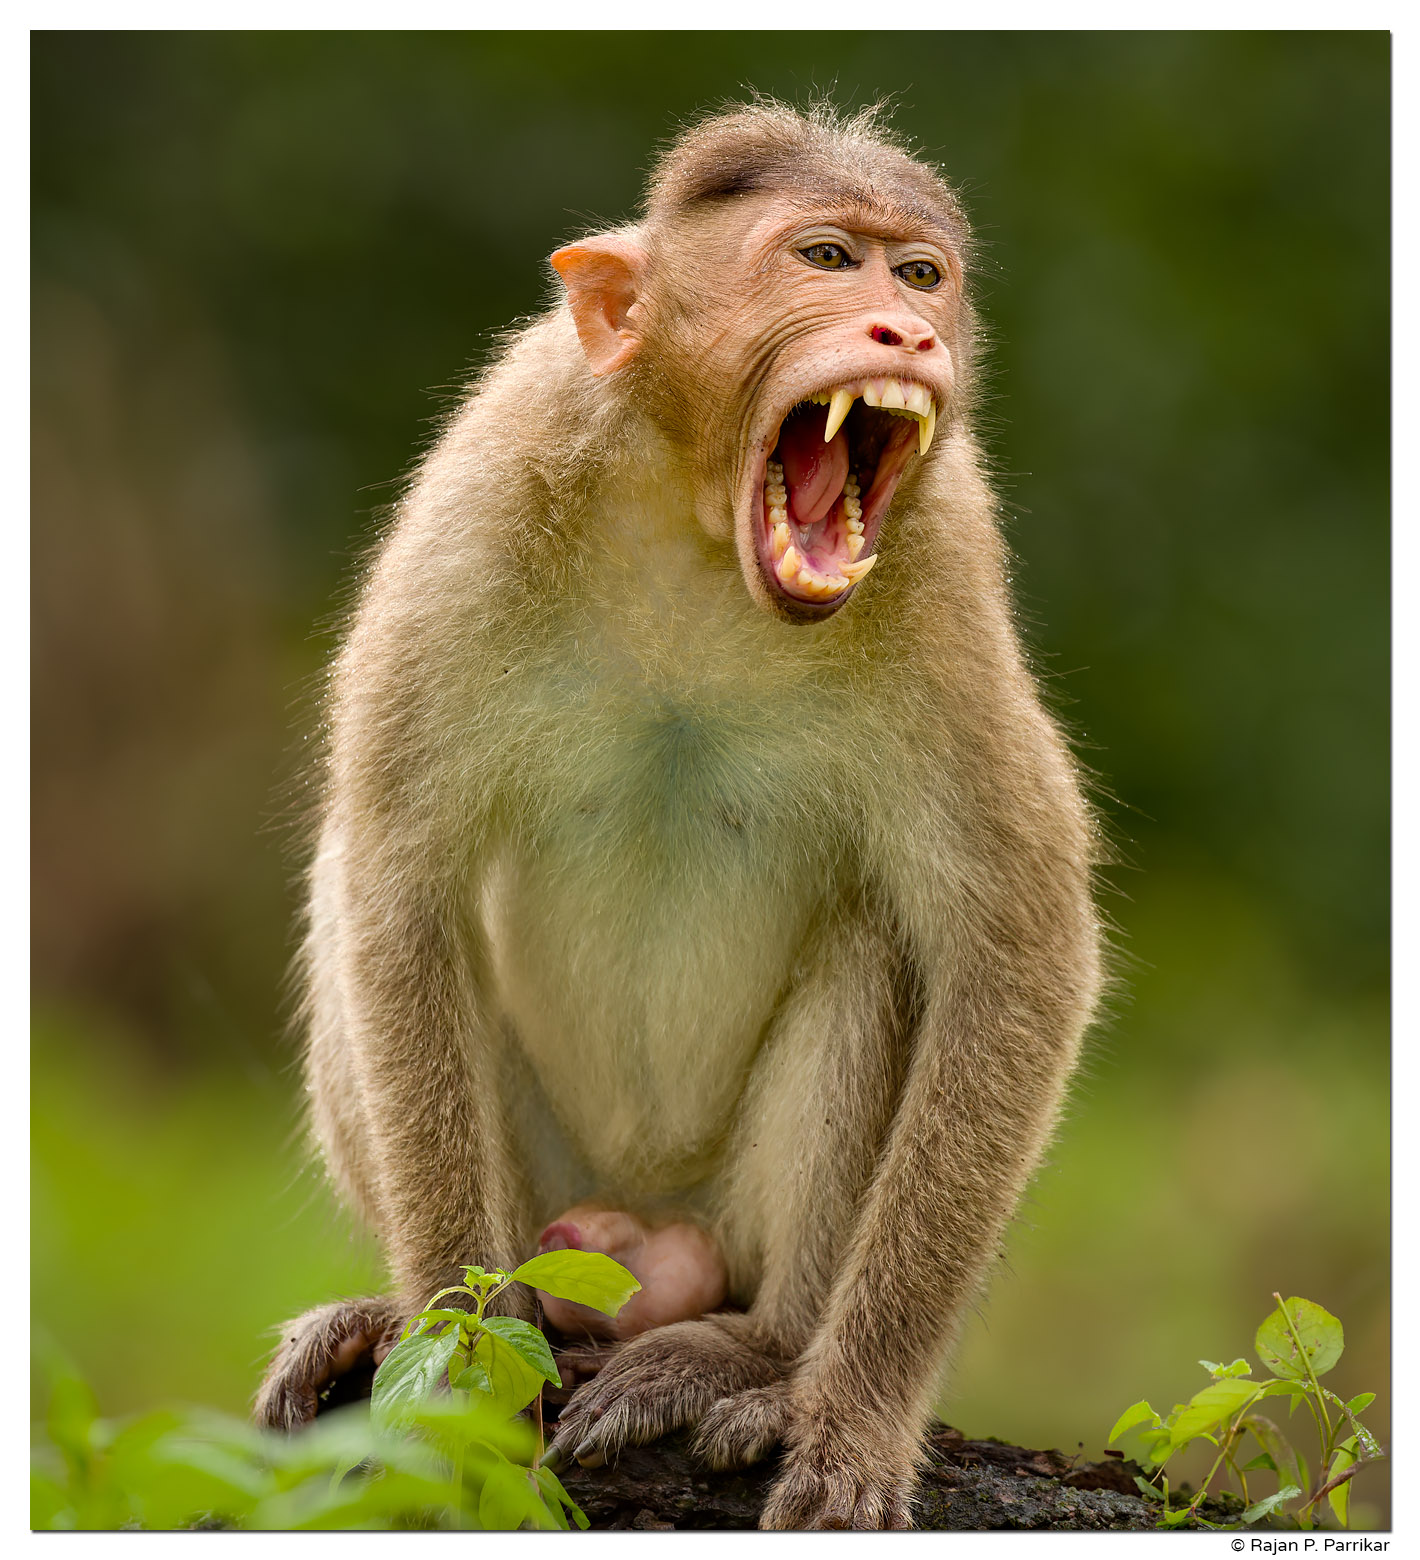 Bonnet Macaque in Sulcorna, Goa